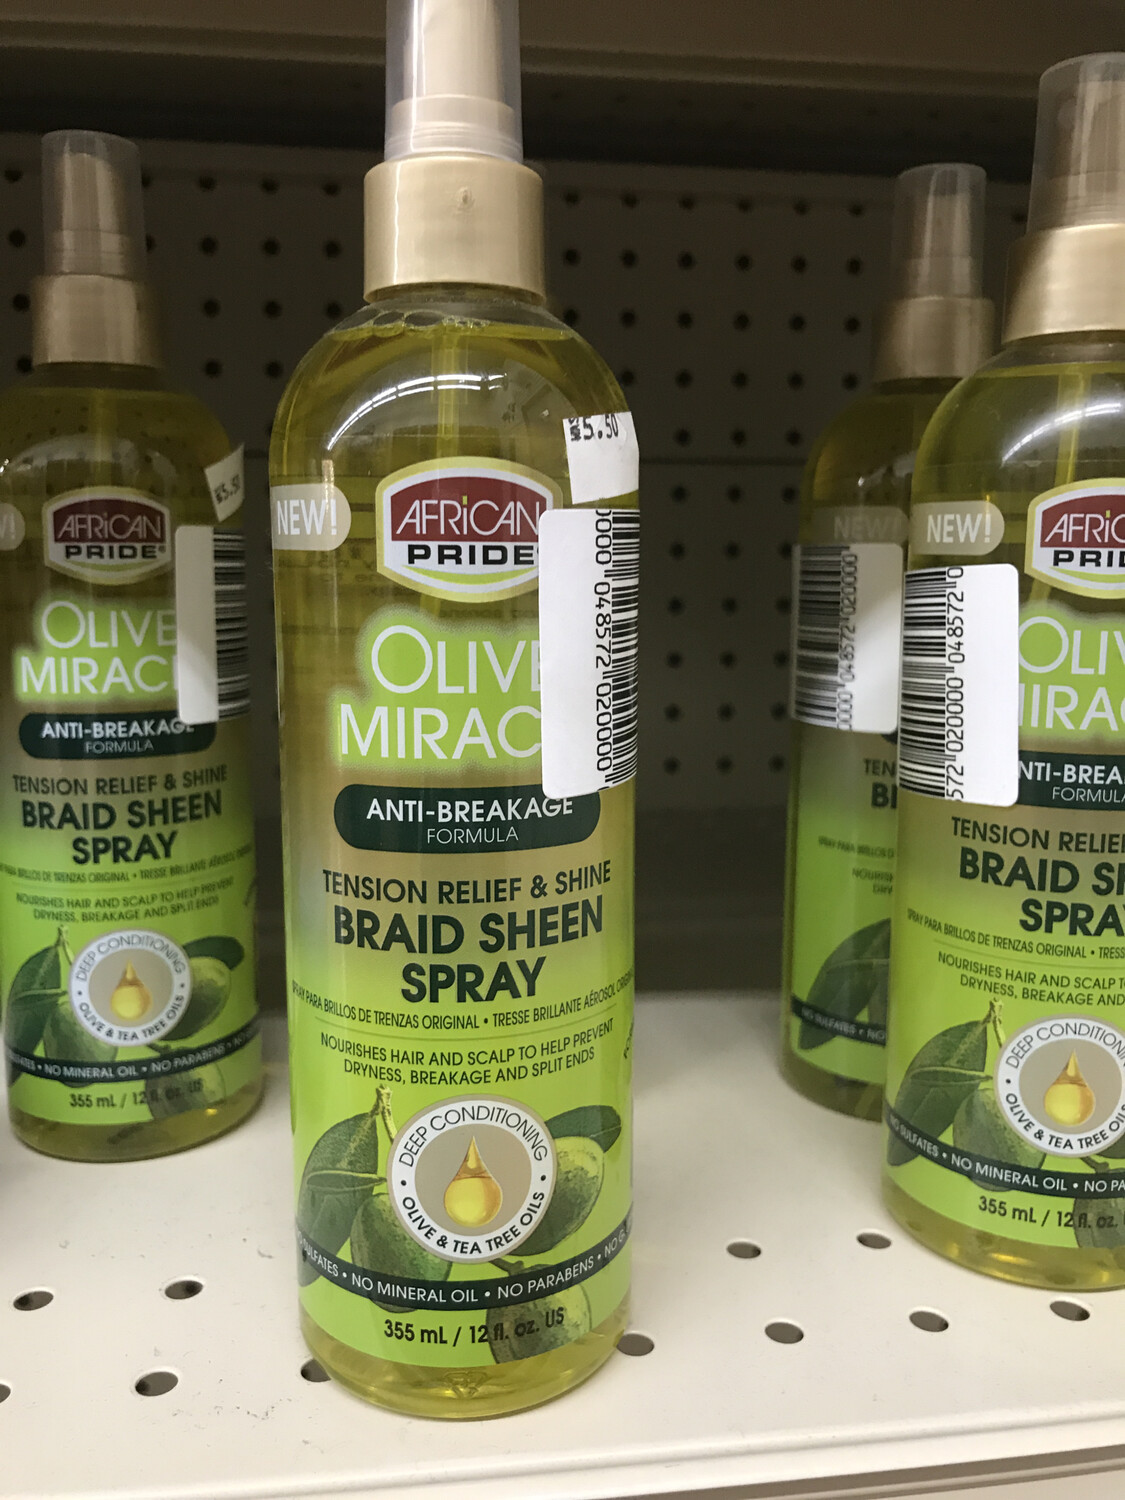 African Pride Olive Miracle Anti- Breakage Braid Sheen 12 Oz.